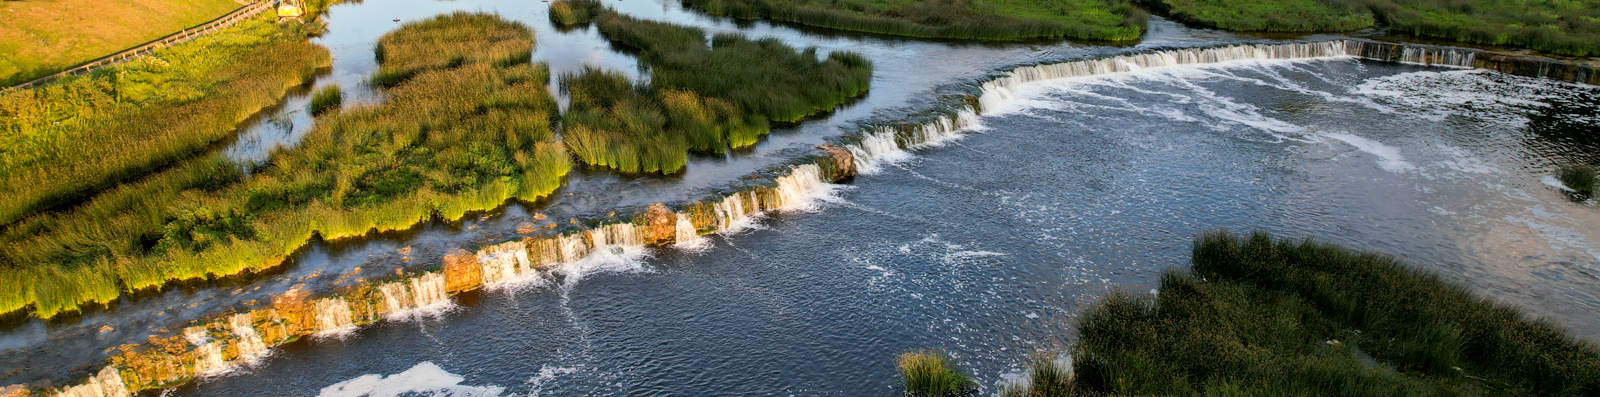 Things to do in Kuldiga Latvia Venta waterfall